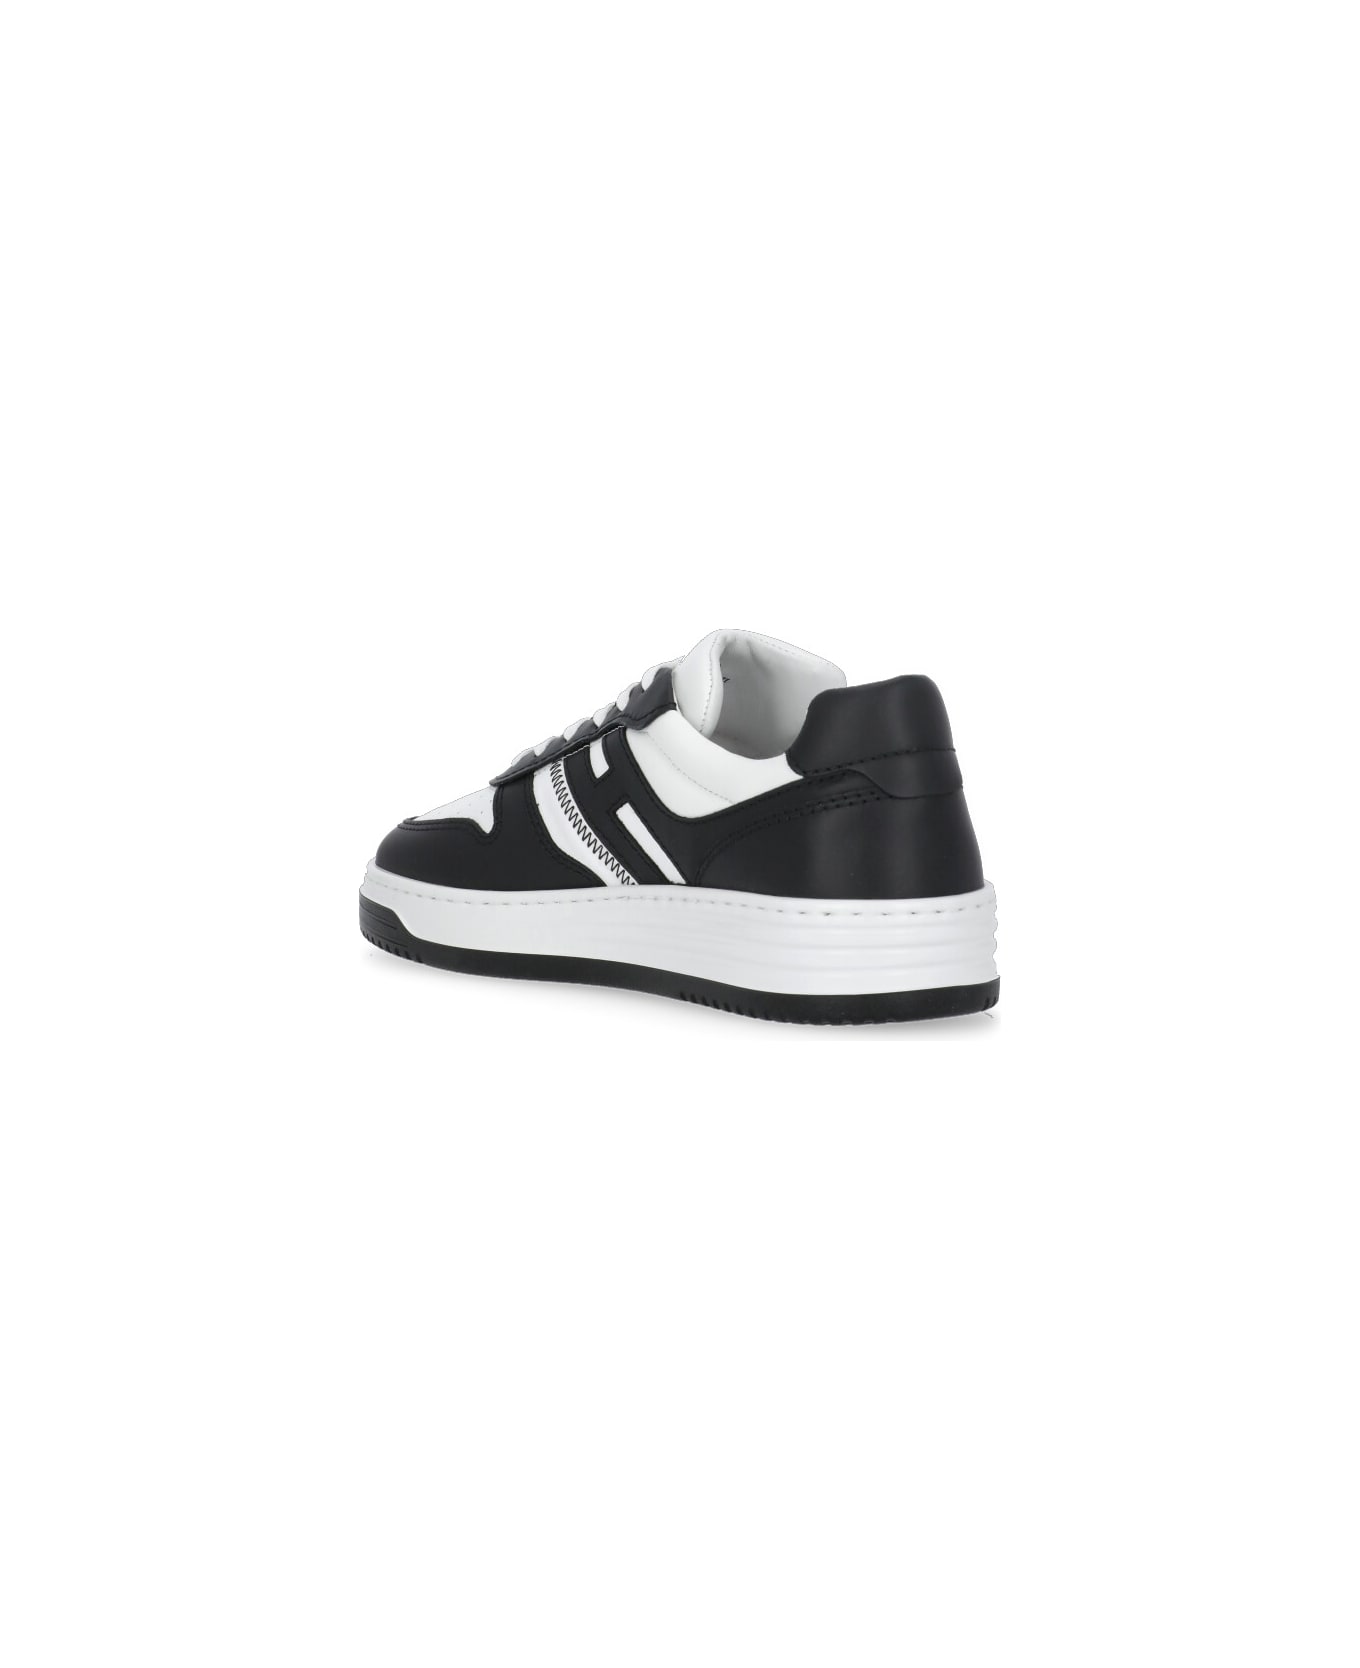 Hogan H630 Sneakers - White/black